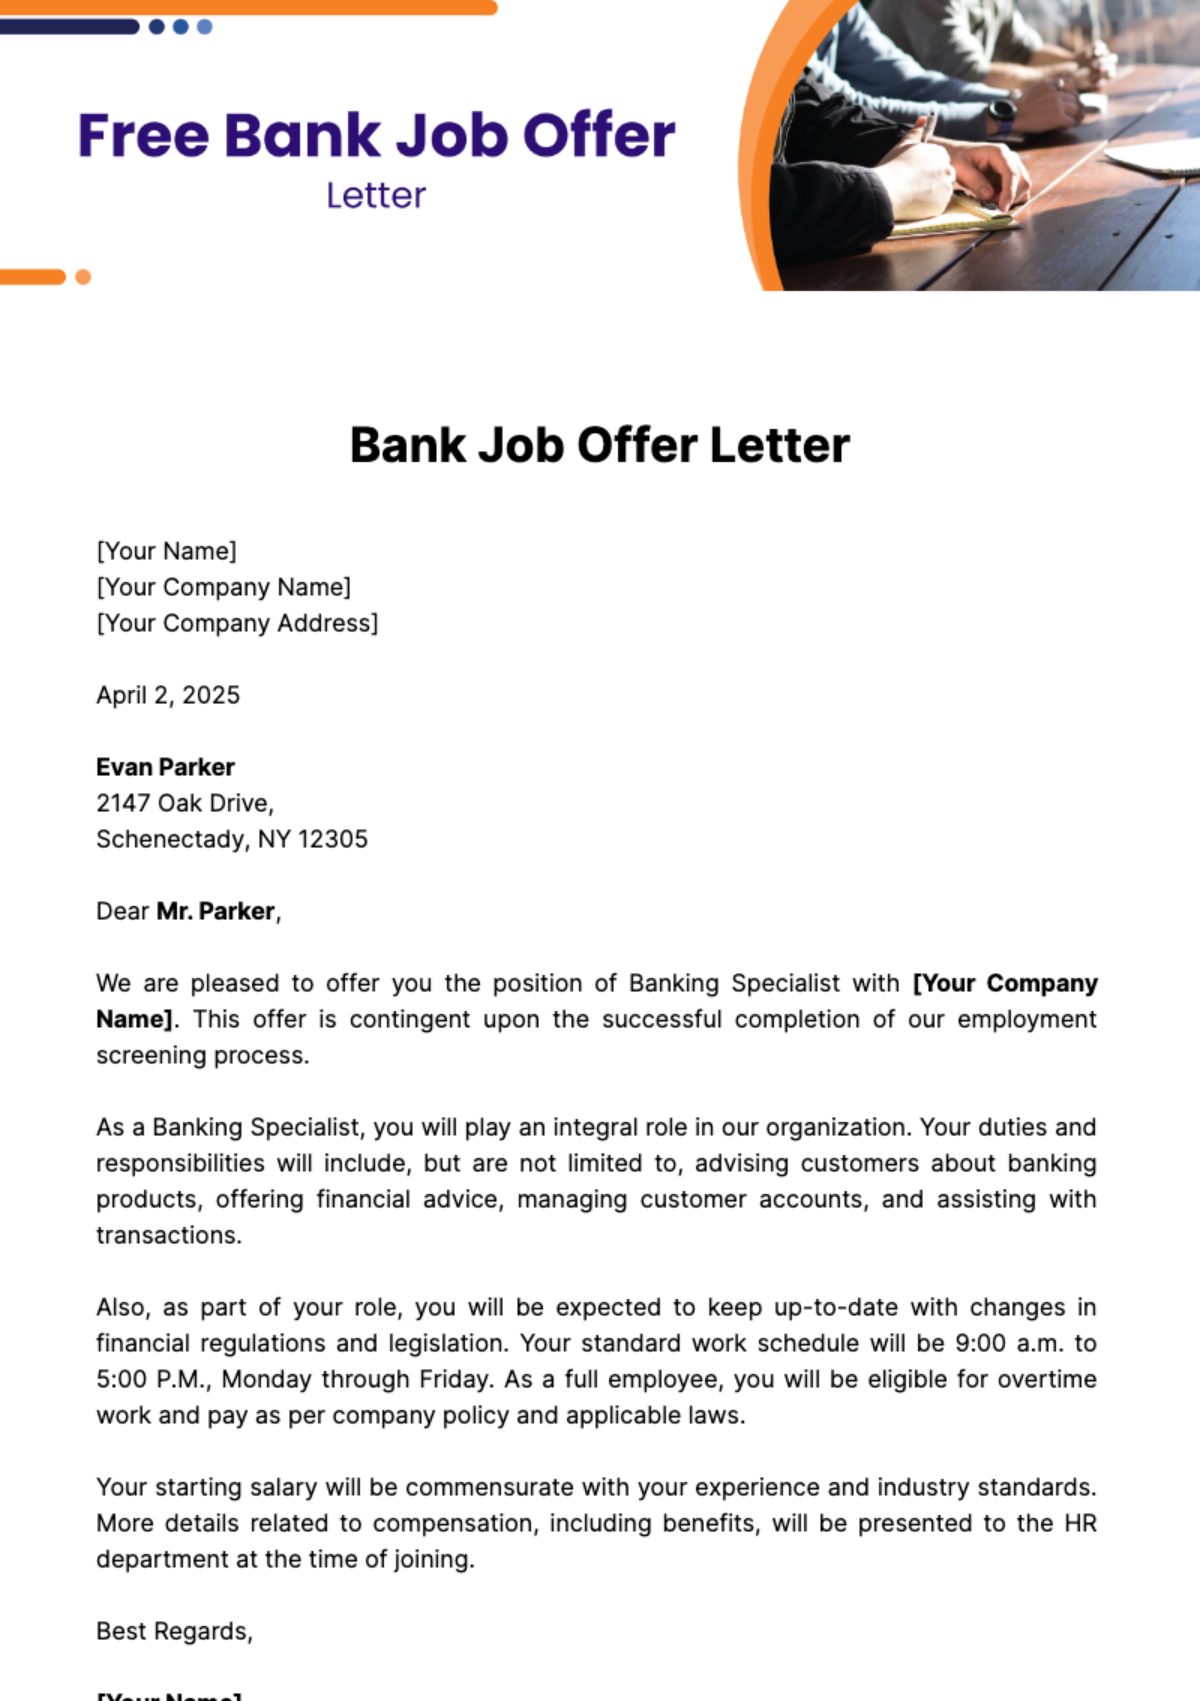 Free Bank Job Offer Letter Template